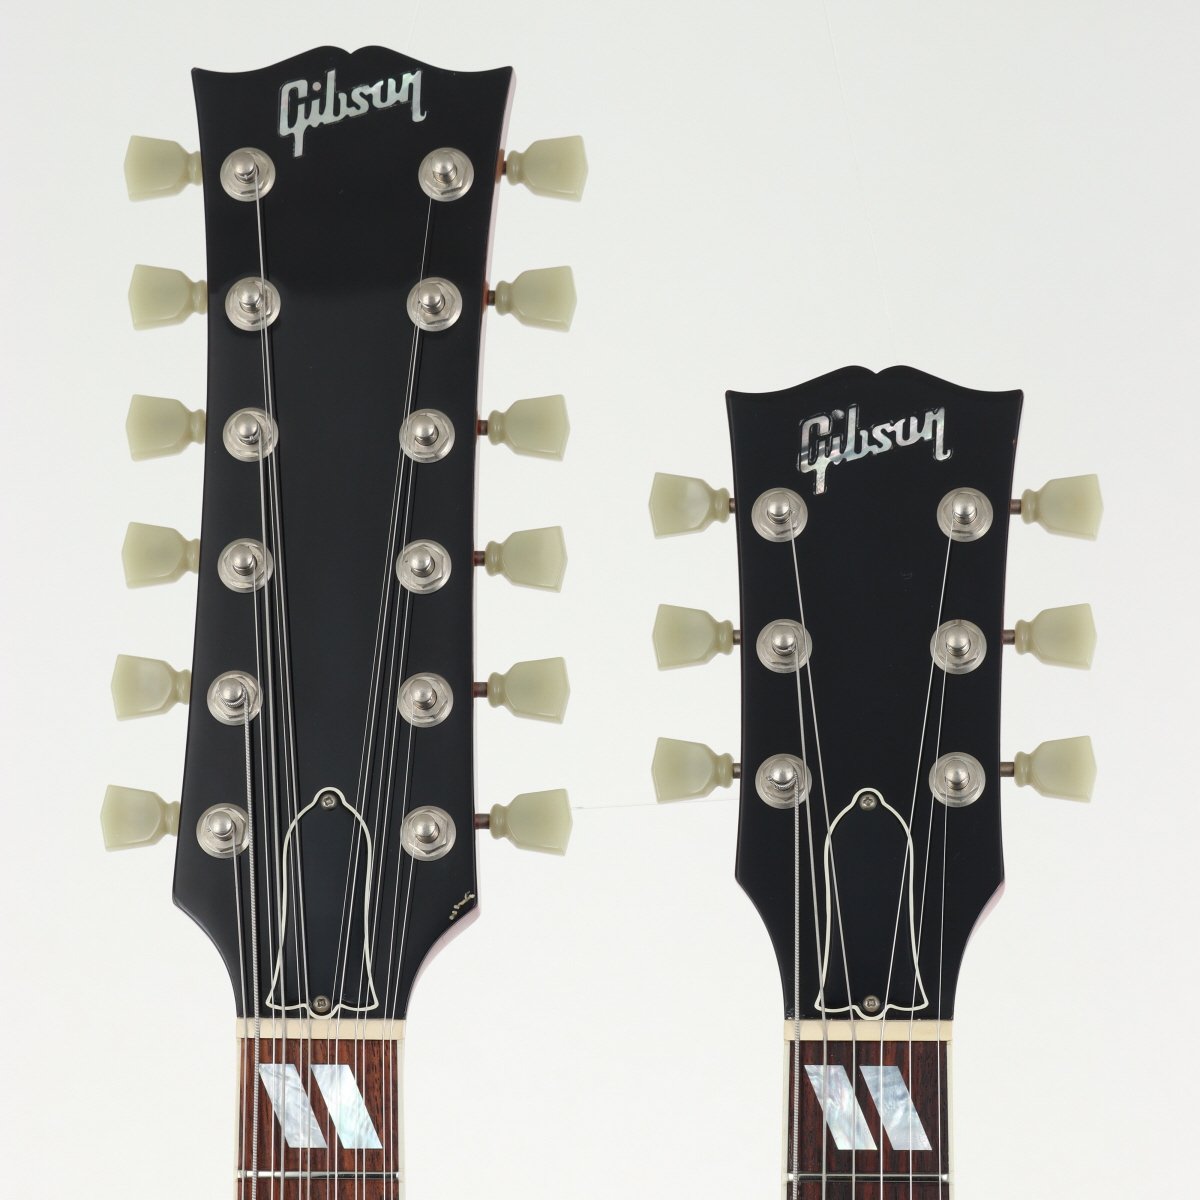 [SN 91596409] USED Gibson USA / EDS-1275 1996 Heritage Cherry [12]